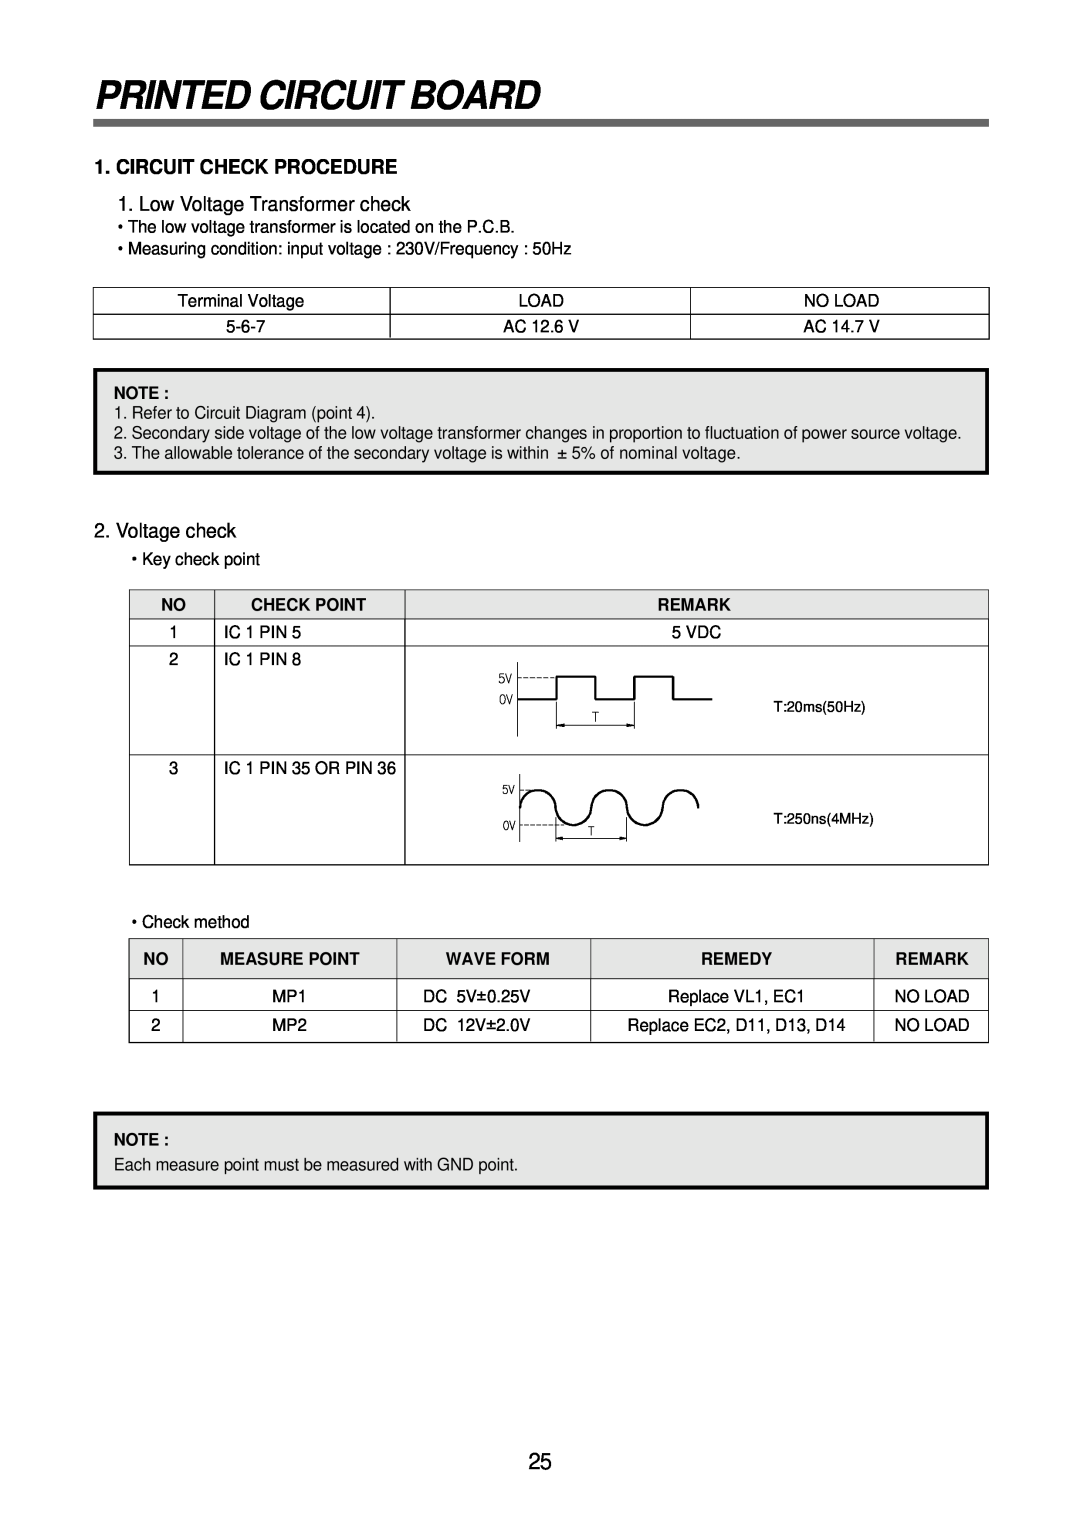 Daewoo KOR-6Q2B5S Printed Circuit Board, Circuit Check Procedure, Low Voltage Transformer check, Voltage check, Wave Form 